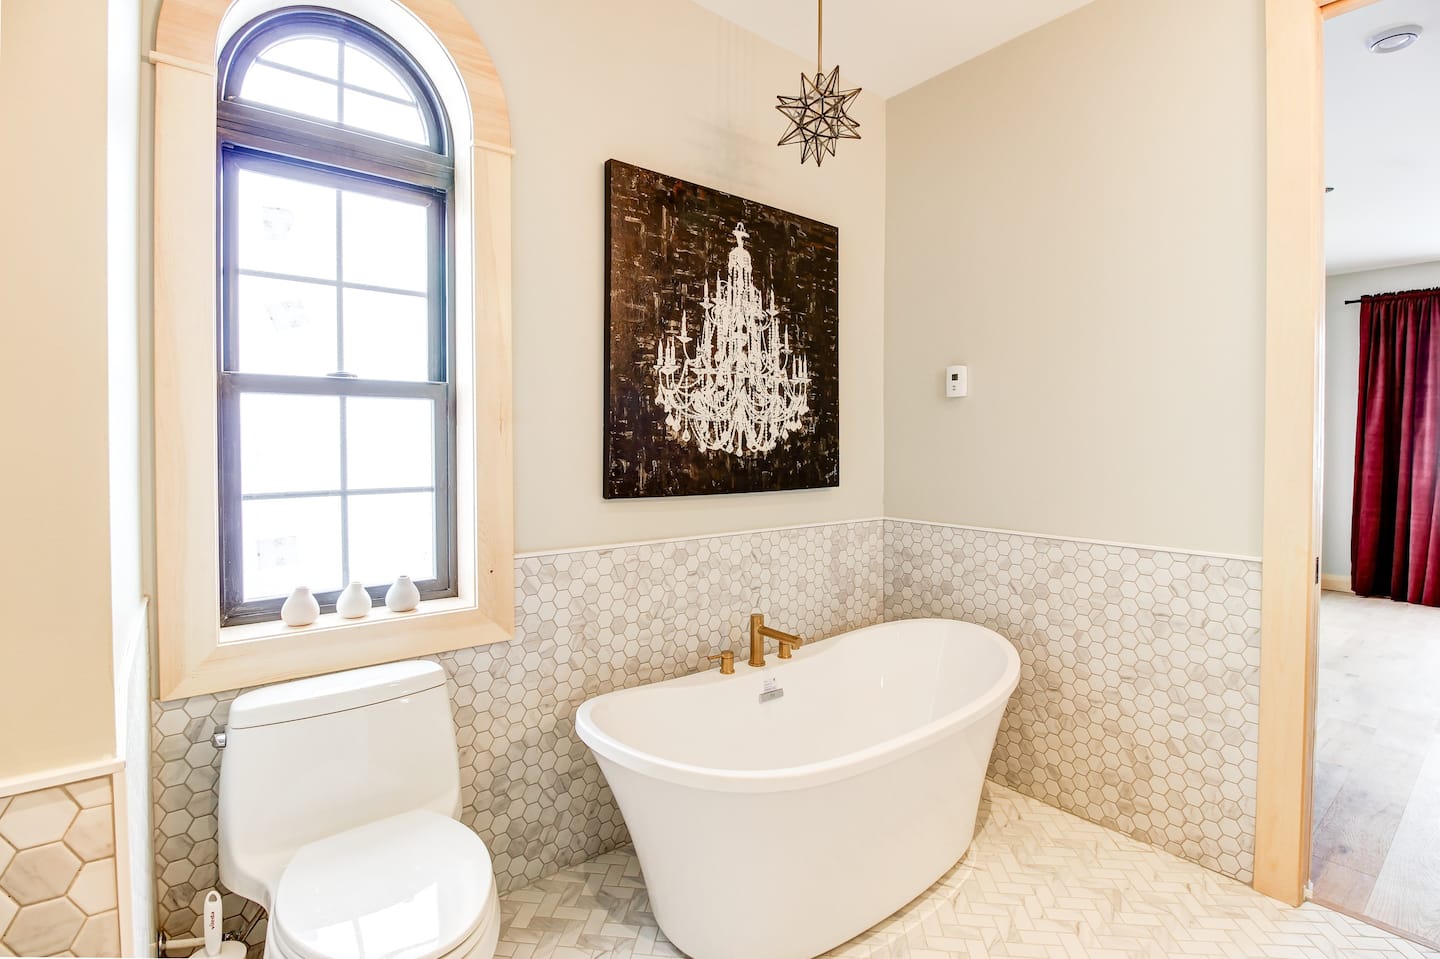 luxurious bathroom with bath tub and geometric tiles